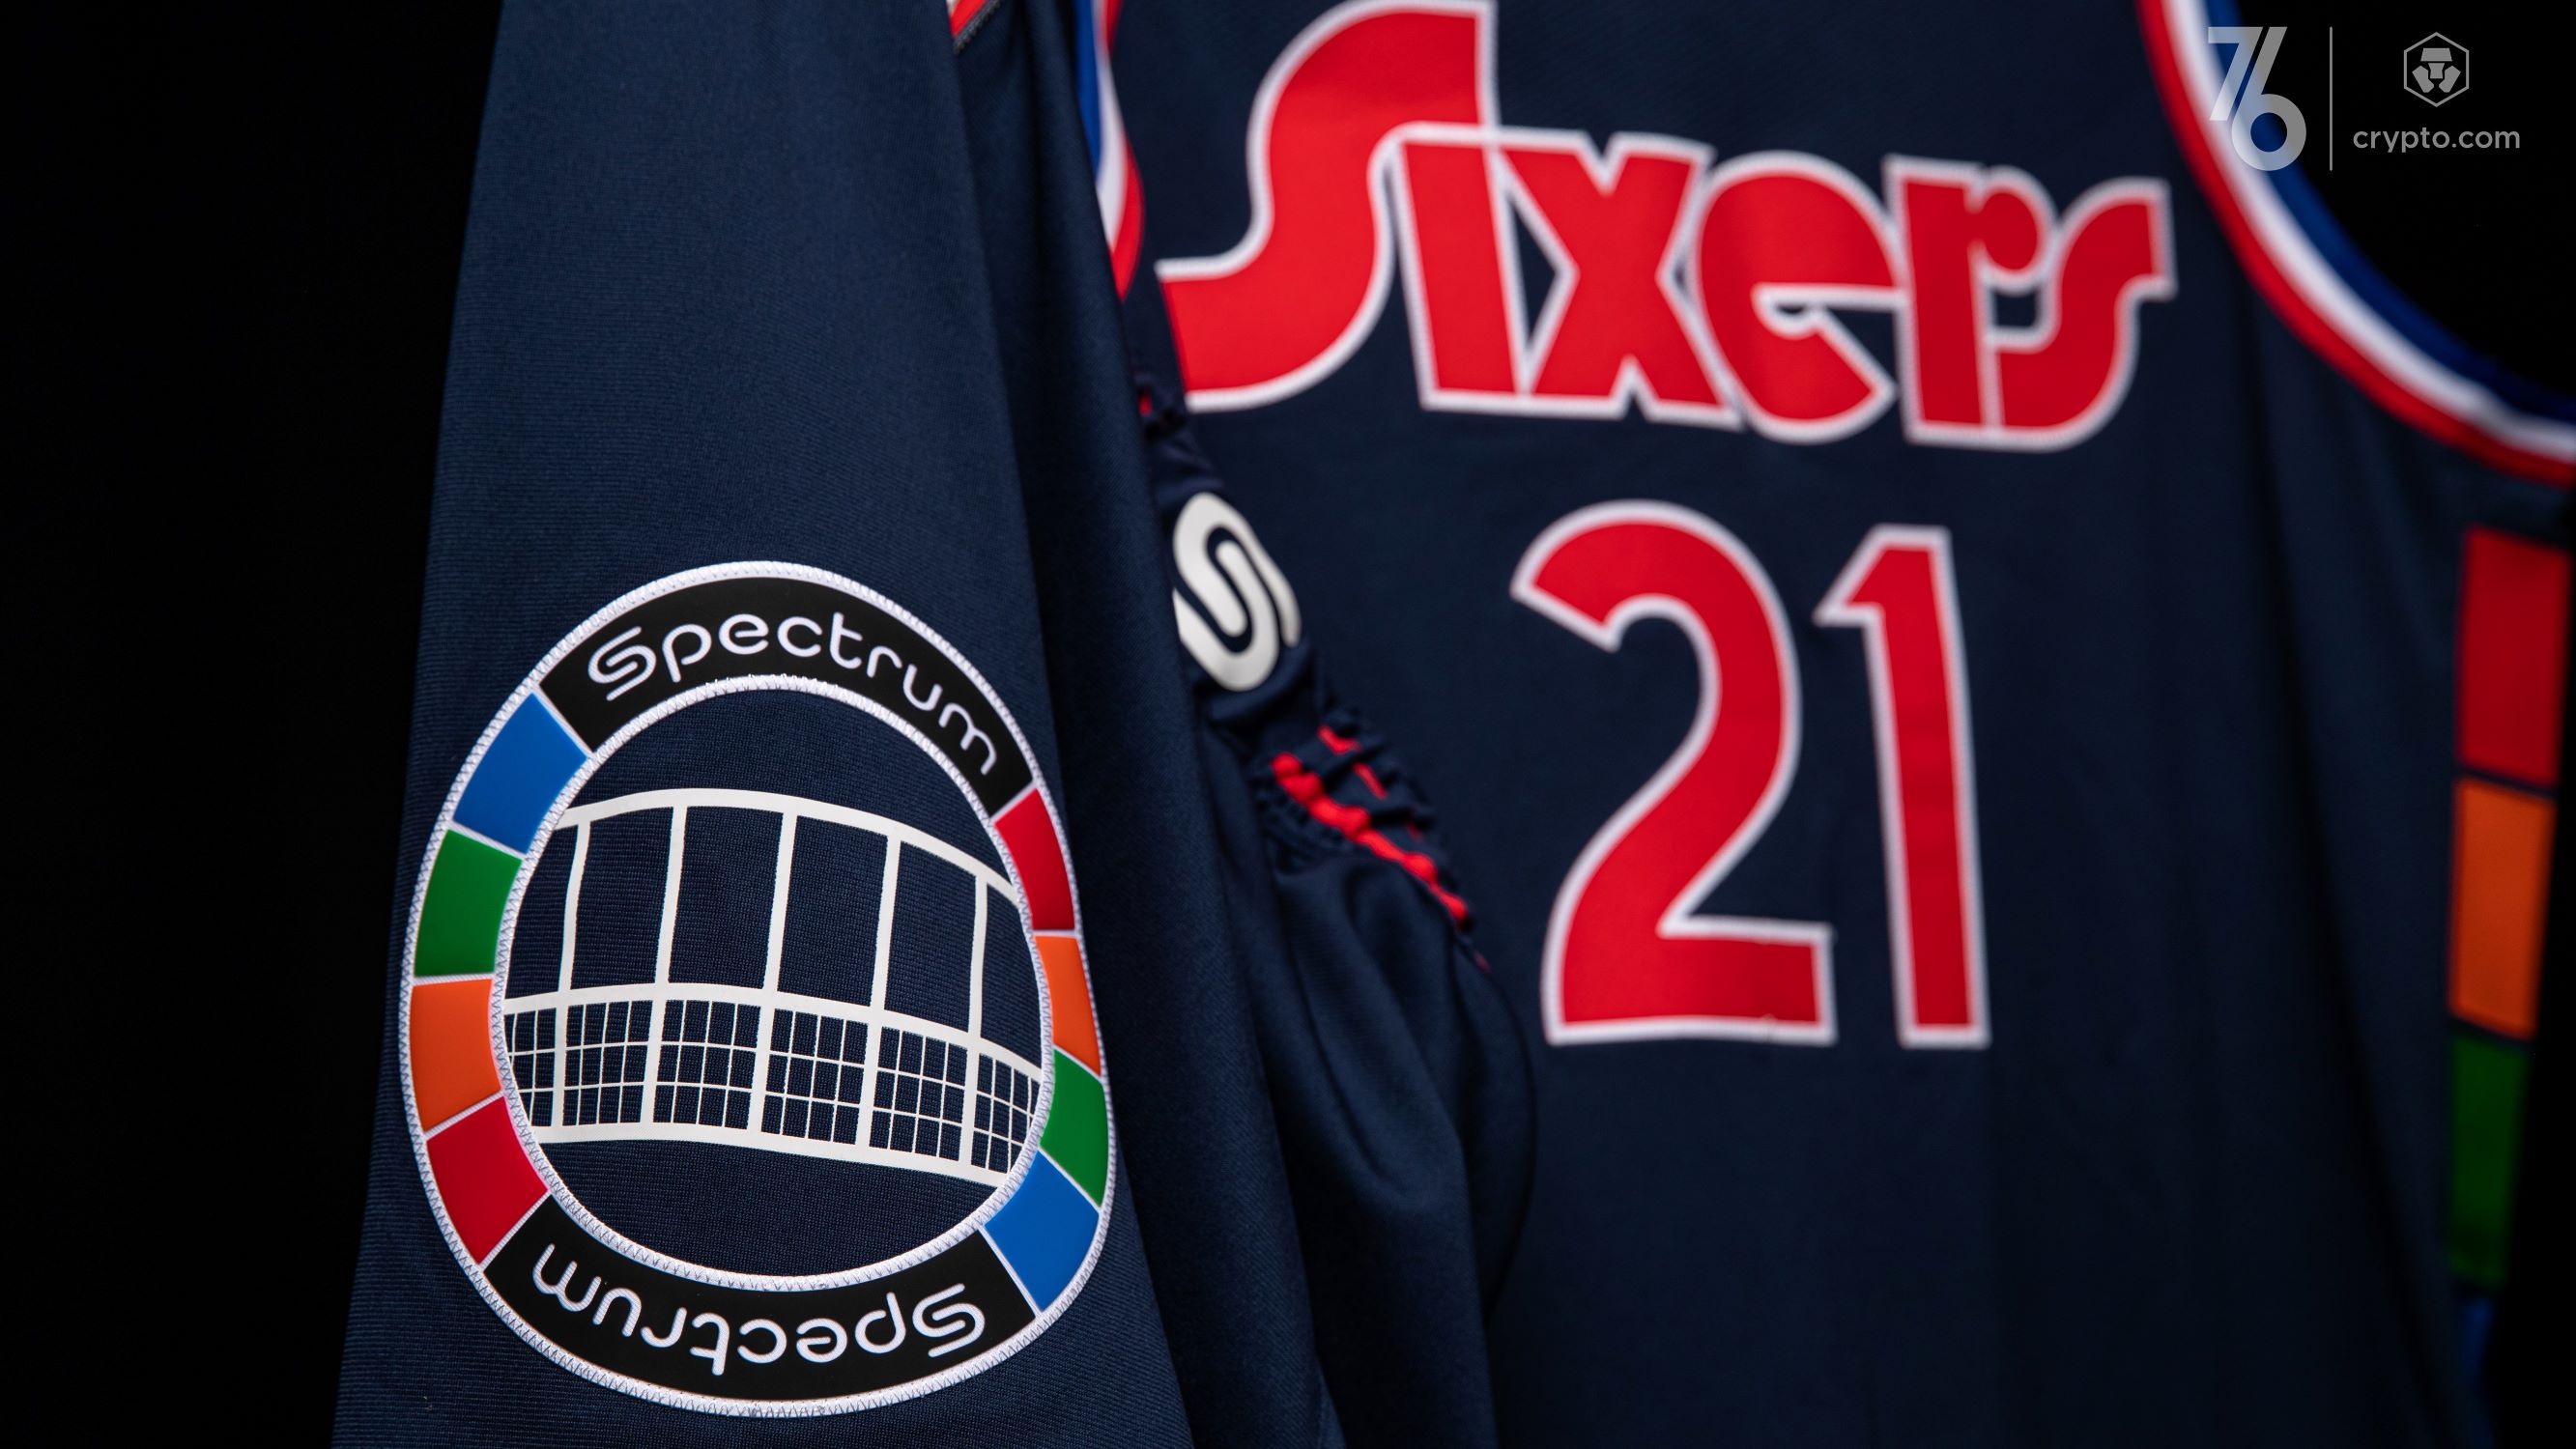 76ers spectrum jersey